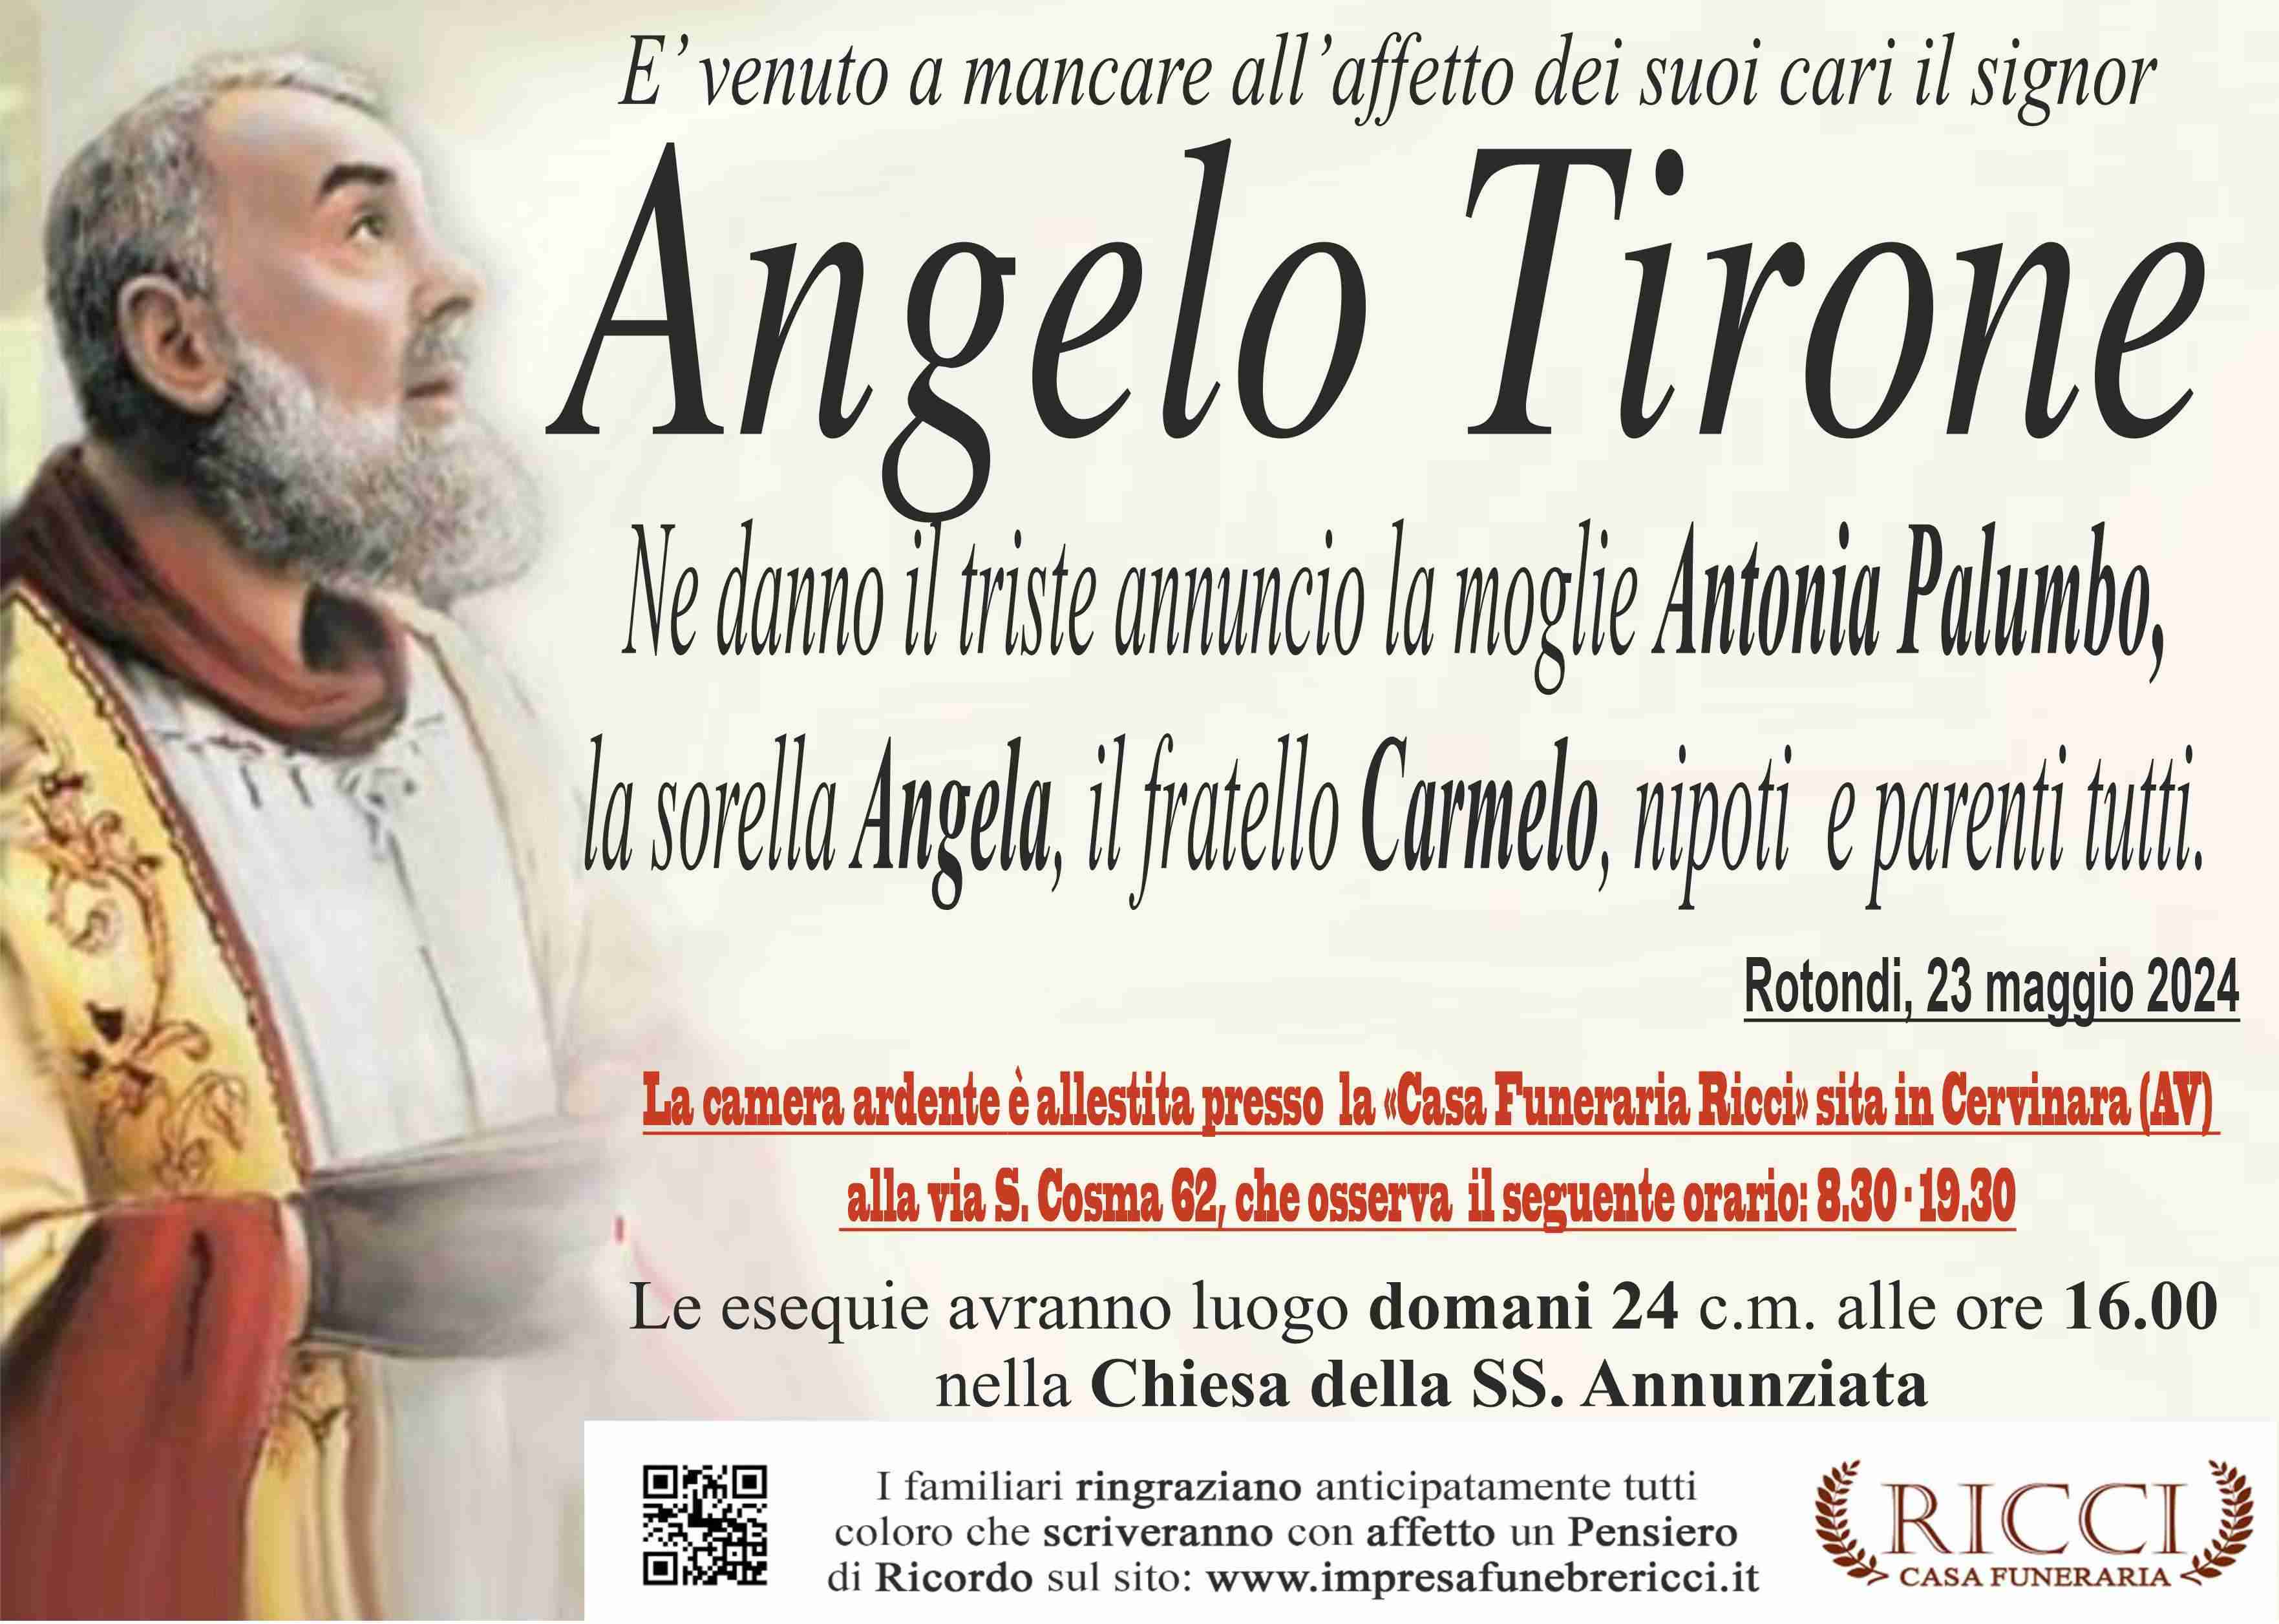 Angelo Tirone